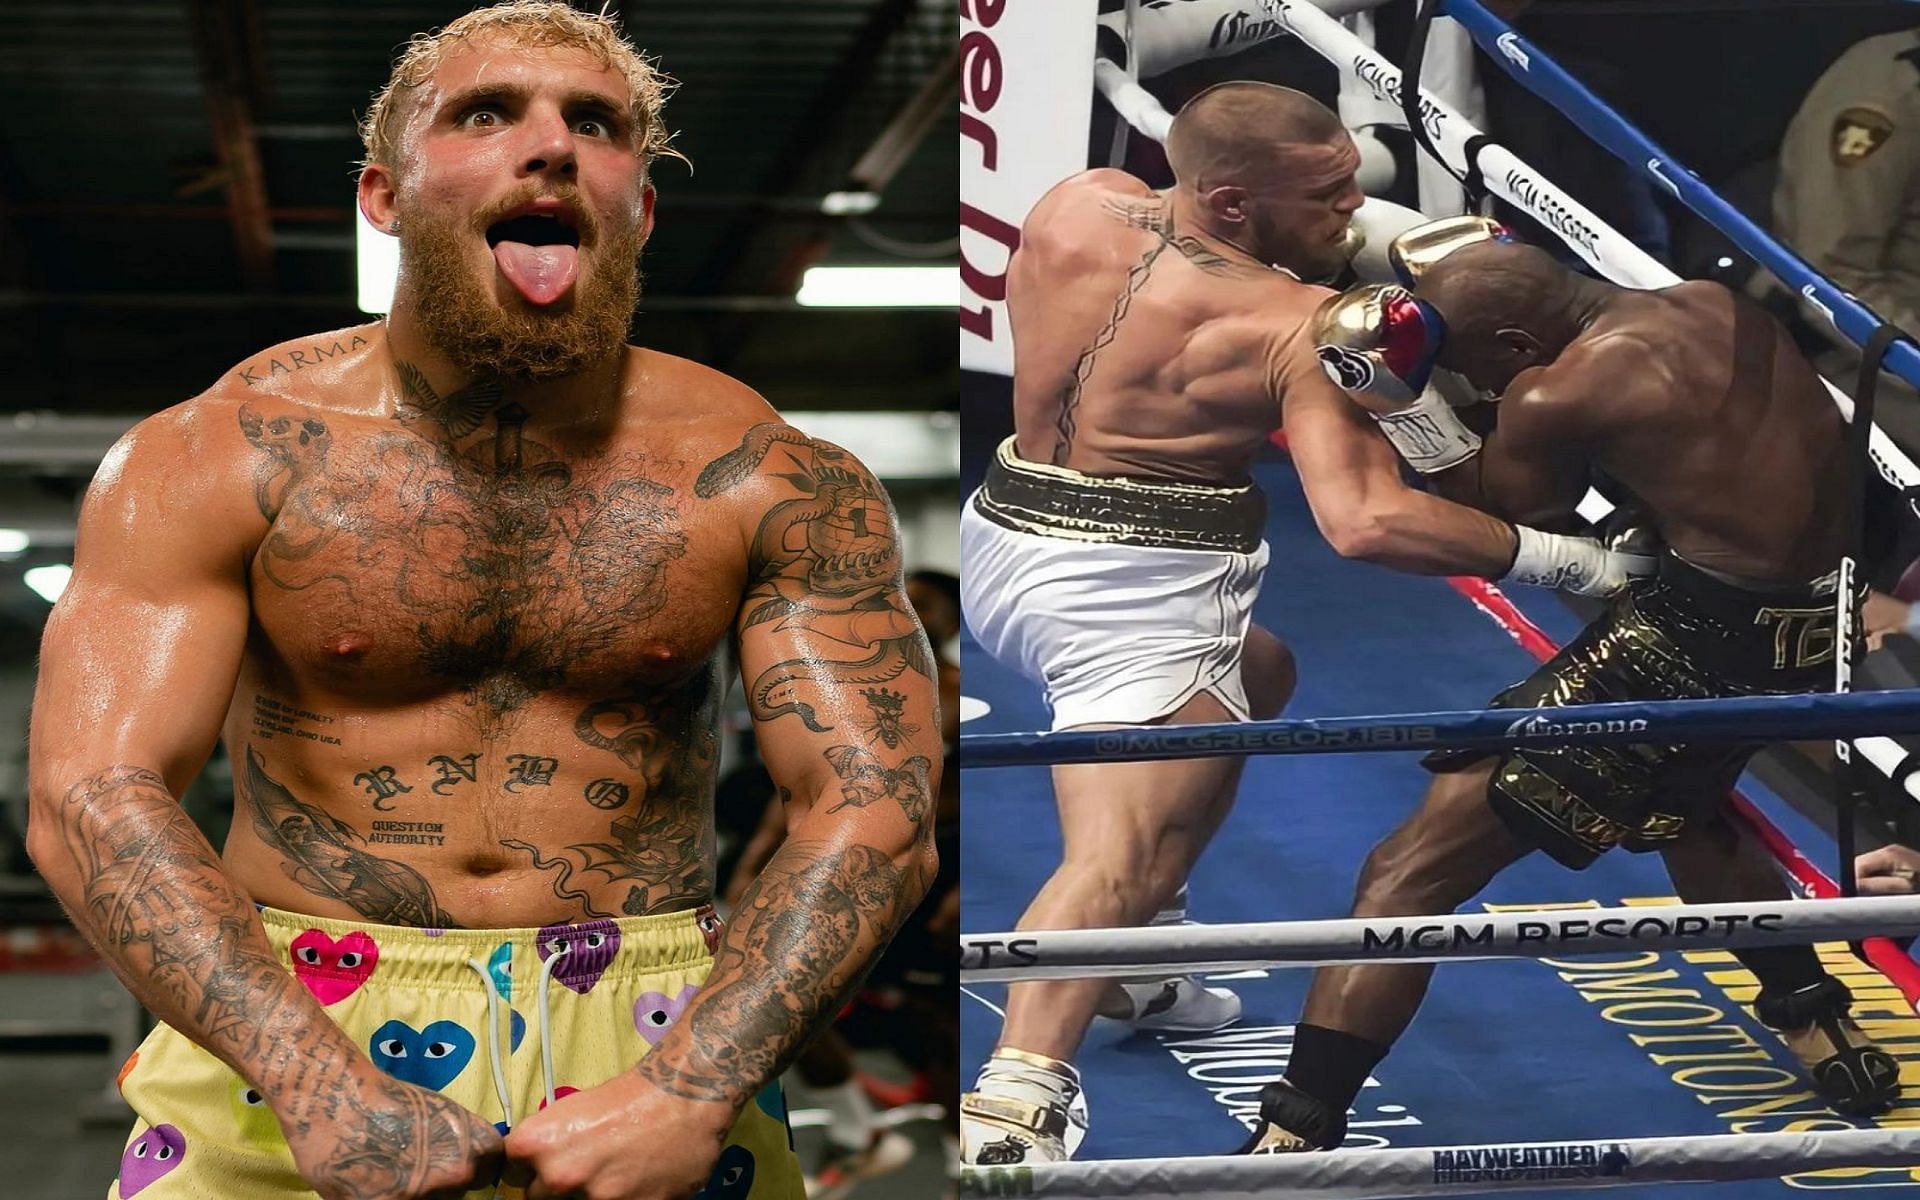 Jake (left) McGregor vs. Mayweather (right) (Credits Instagram @thenotoriousmma and @jakepaul)